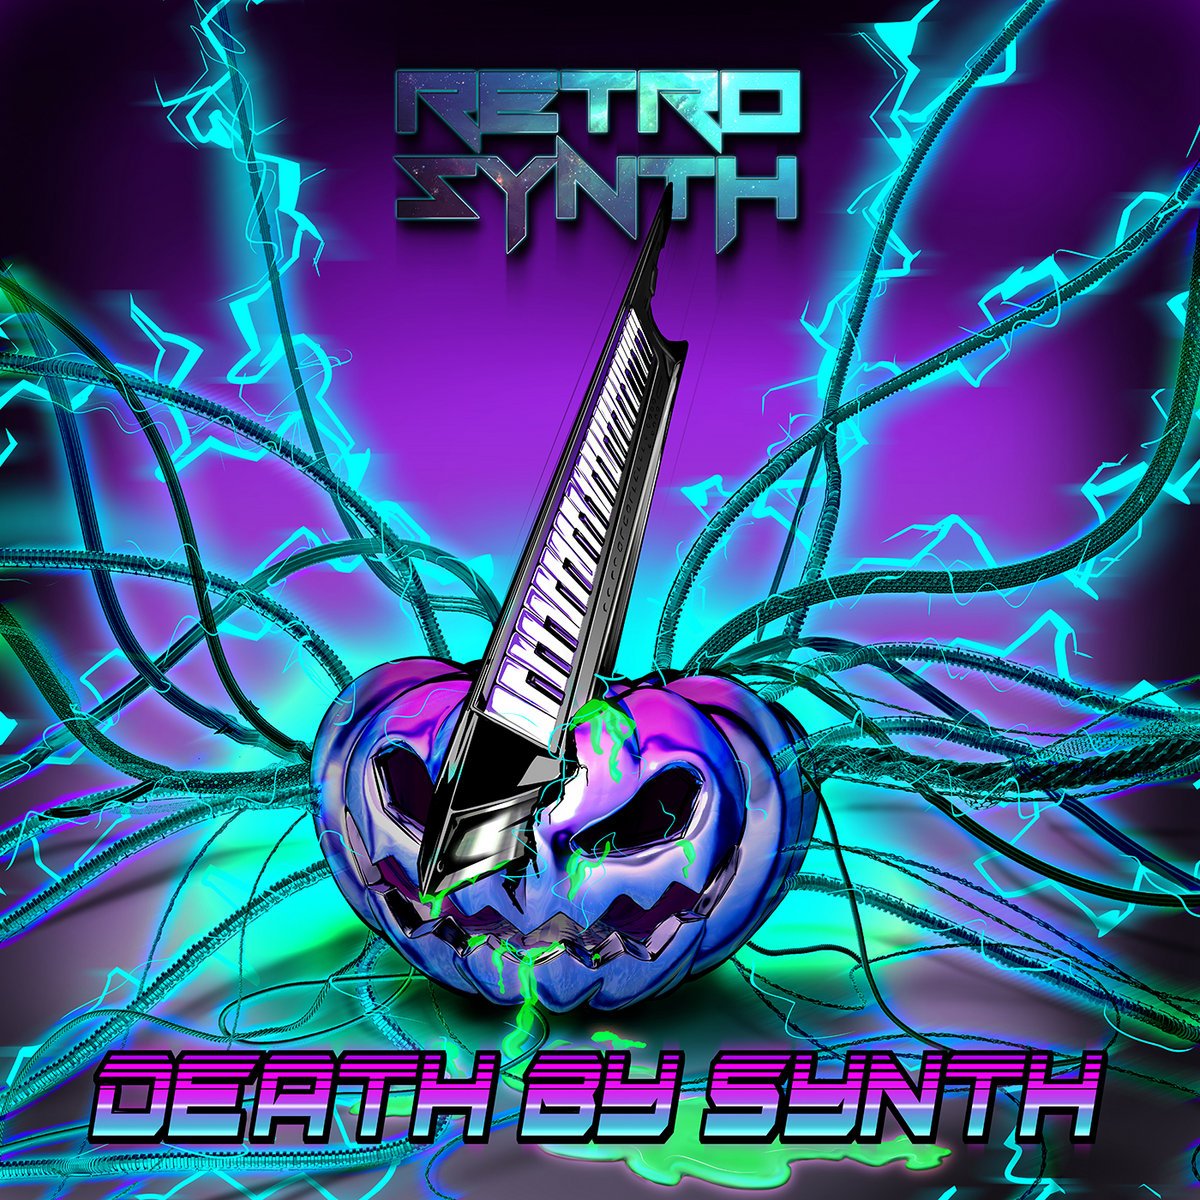 Darksynth. Synth Oxygen альбом. Darksynth обложки. Darksynth Music Art. Darkwave Music.